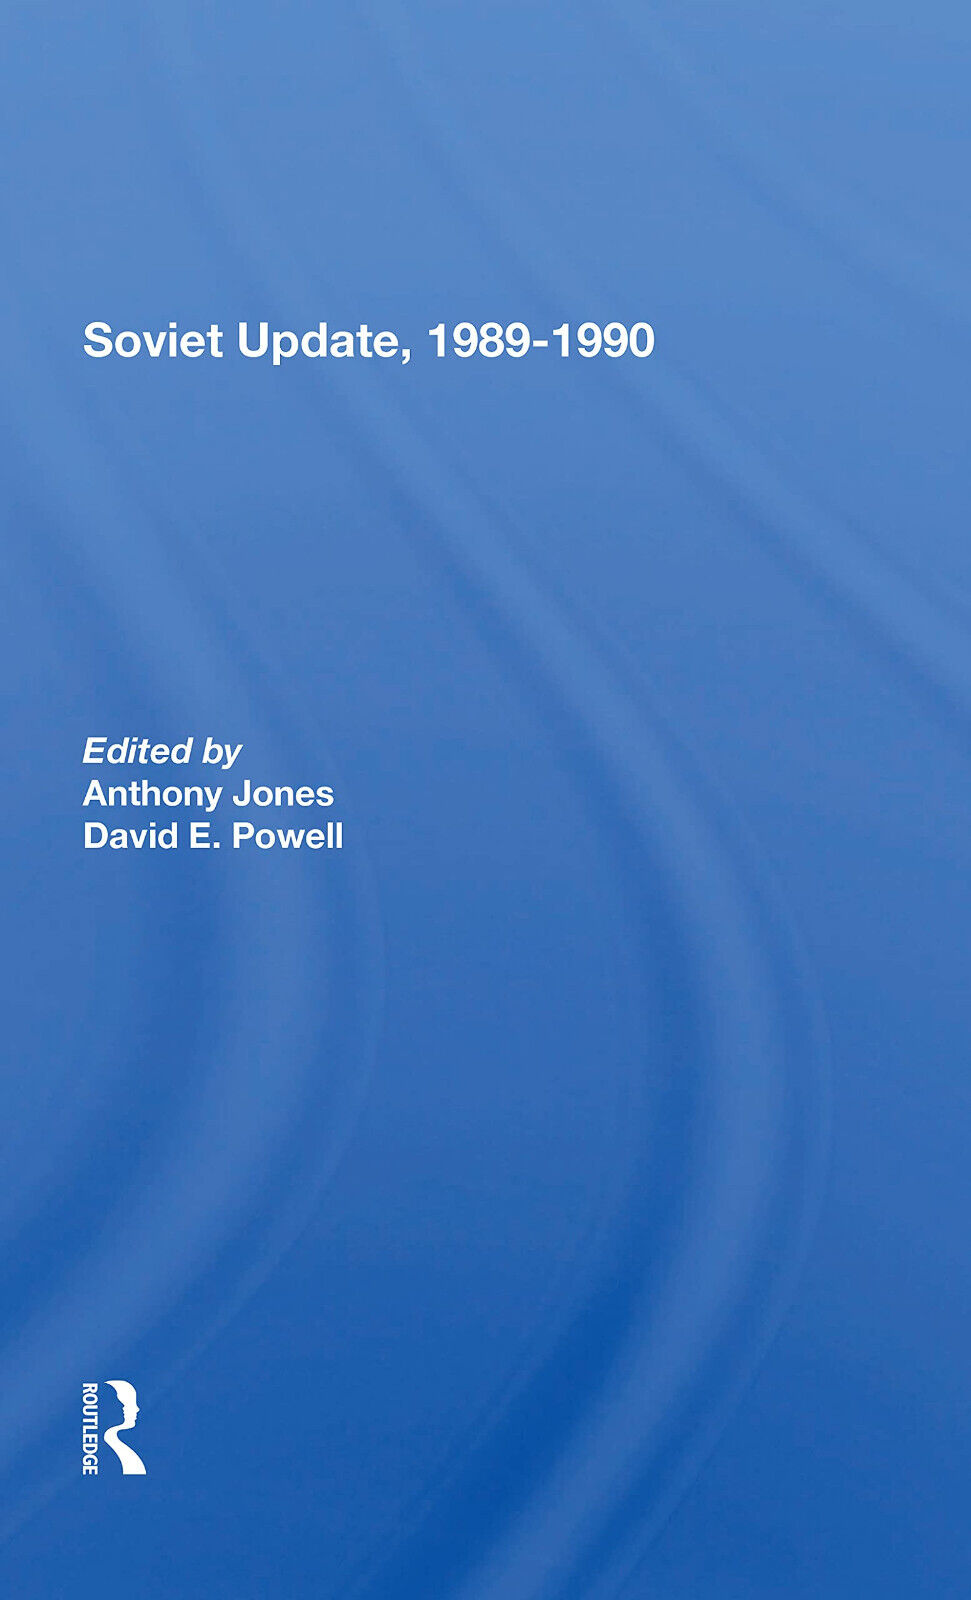 Soviet Update, 1989 1990 - Anthony Jones, David E. Powell - Routledge, 2021